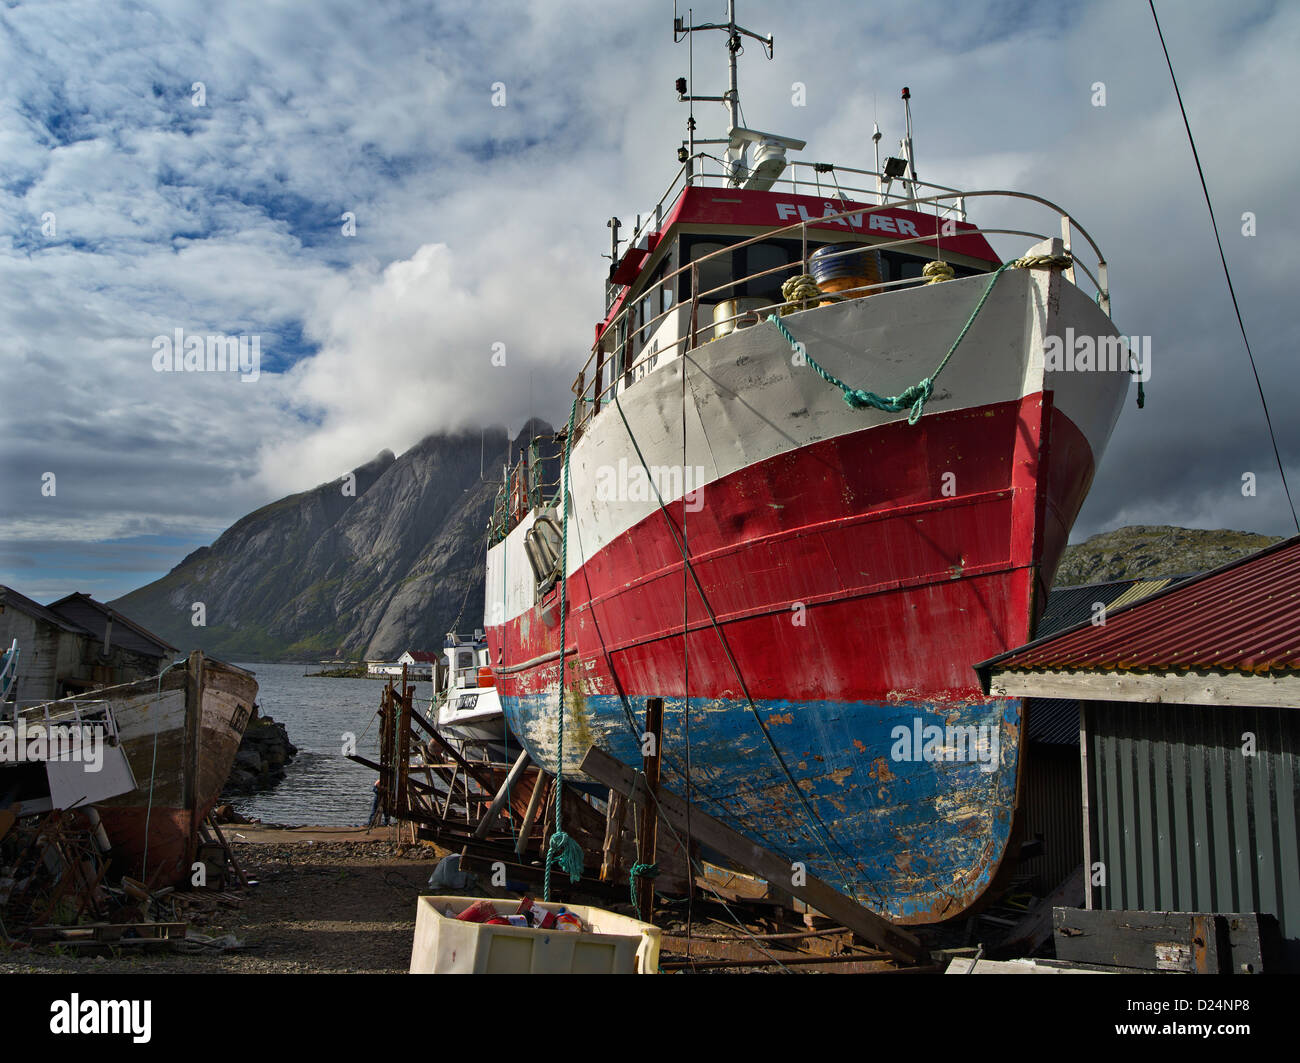 Fishingboat in for repair at the boatyard at Sund, Lofoten, arctic Norway Stock Photo